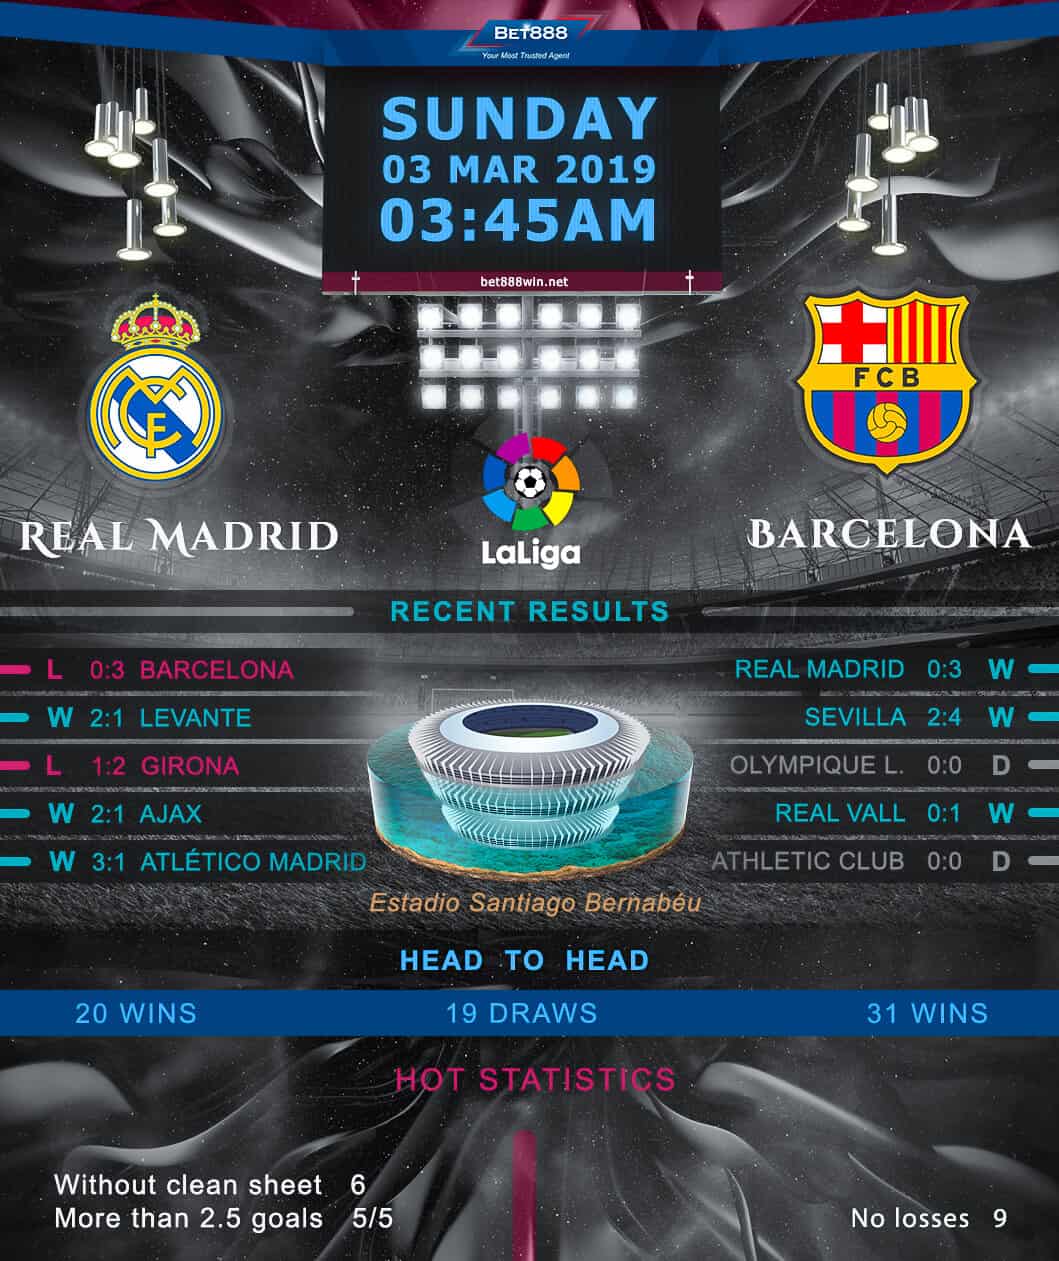 Real Madrid vs Barcelona 03/03/19